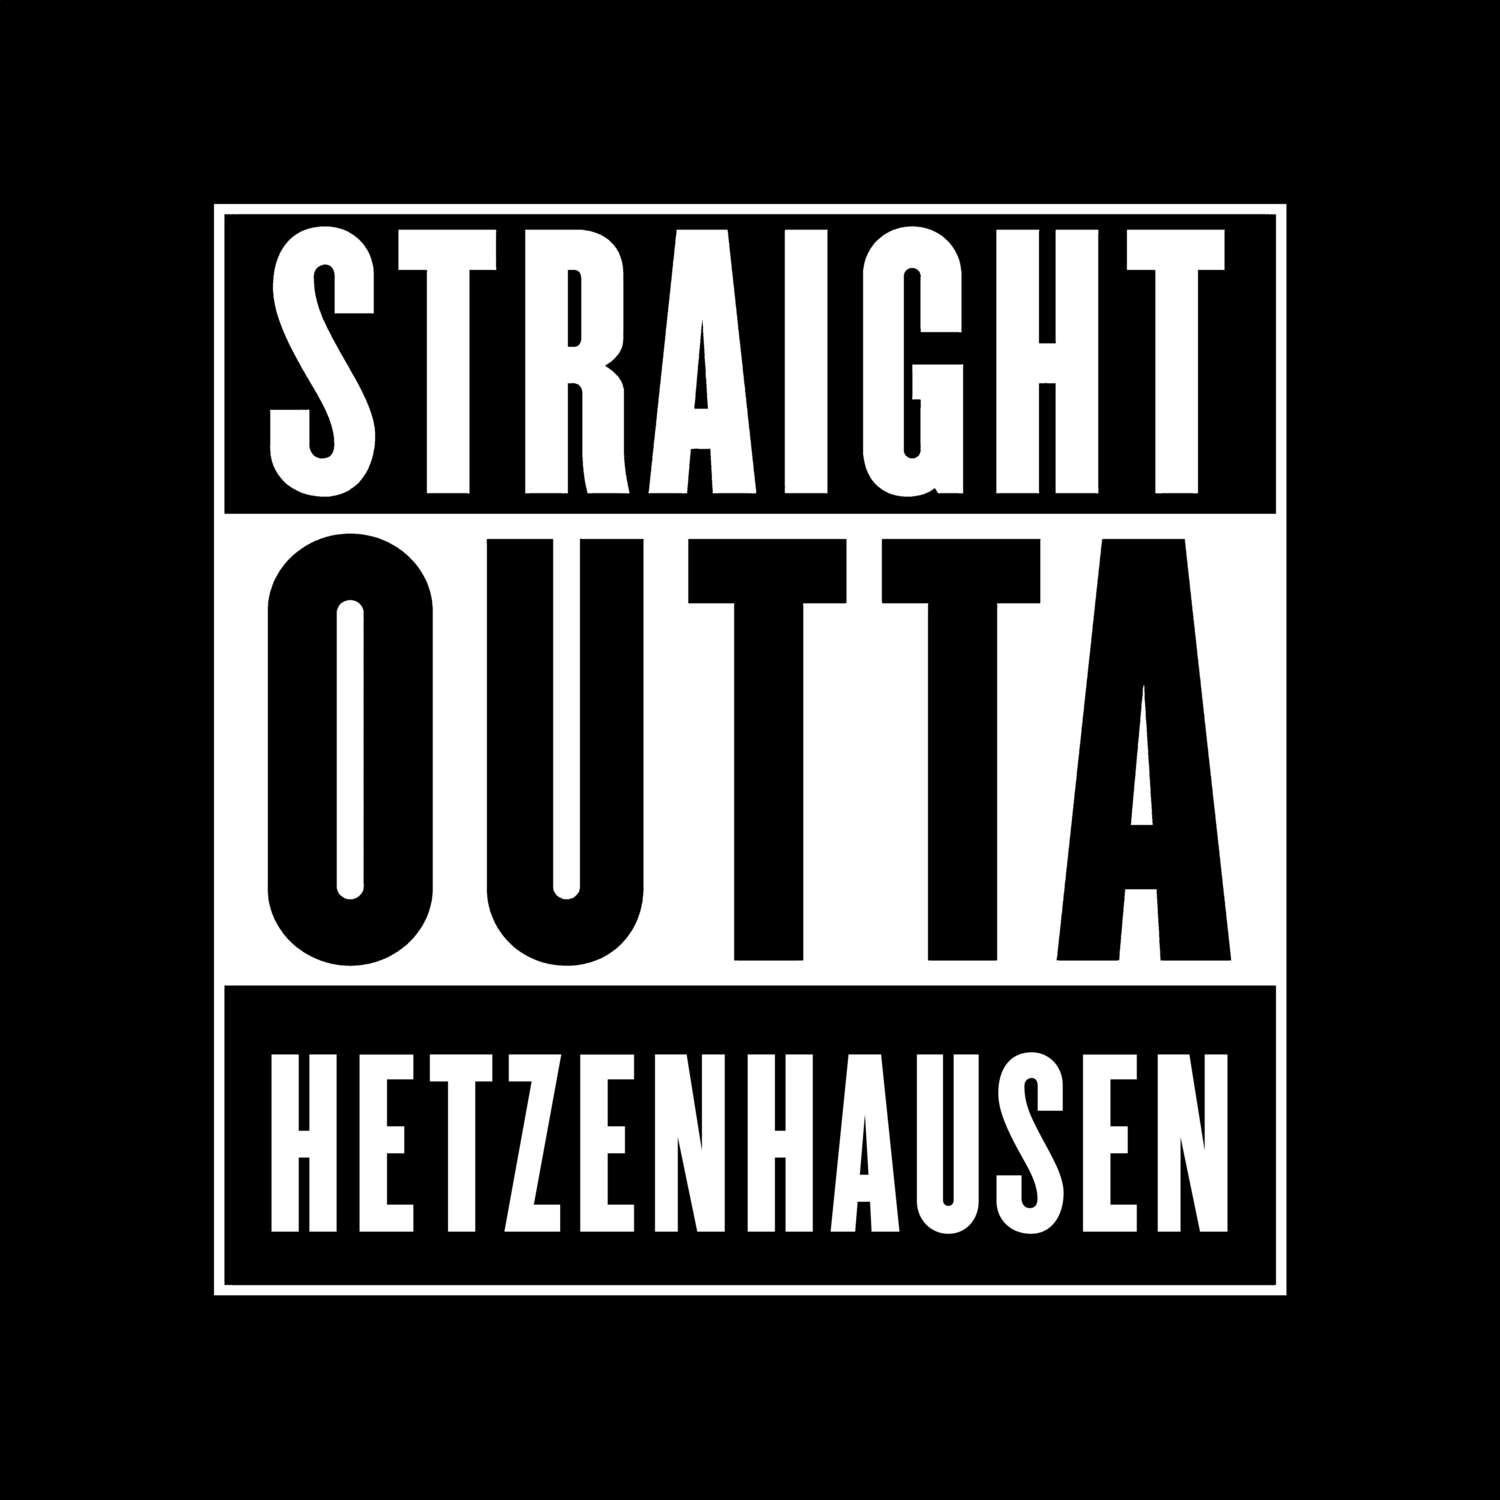 Hetzenhausen T-Shirt »Straight Outta«